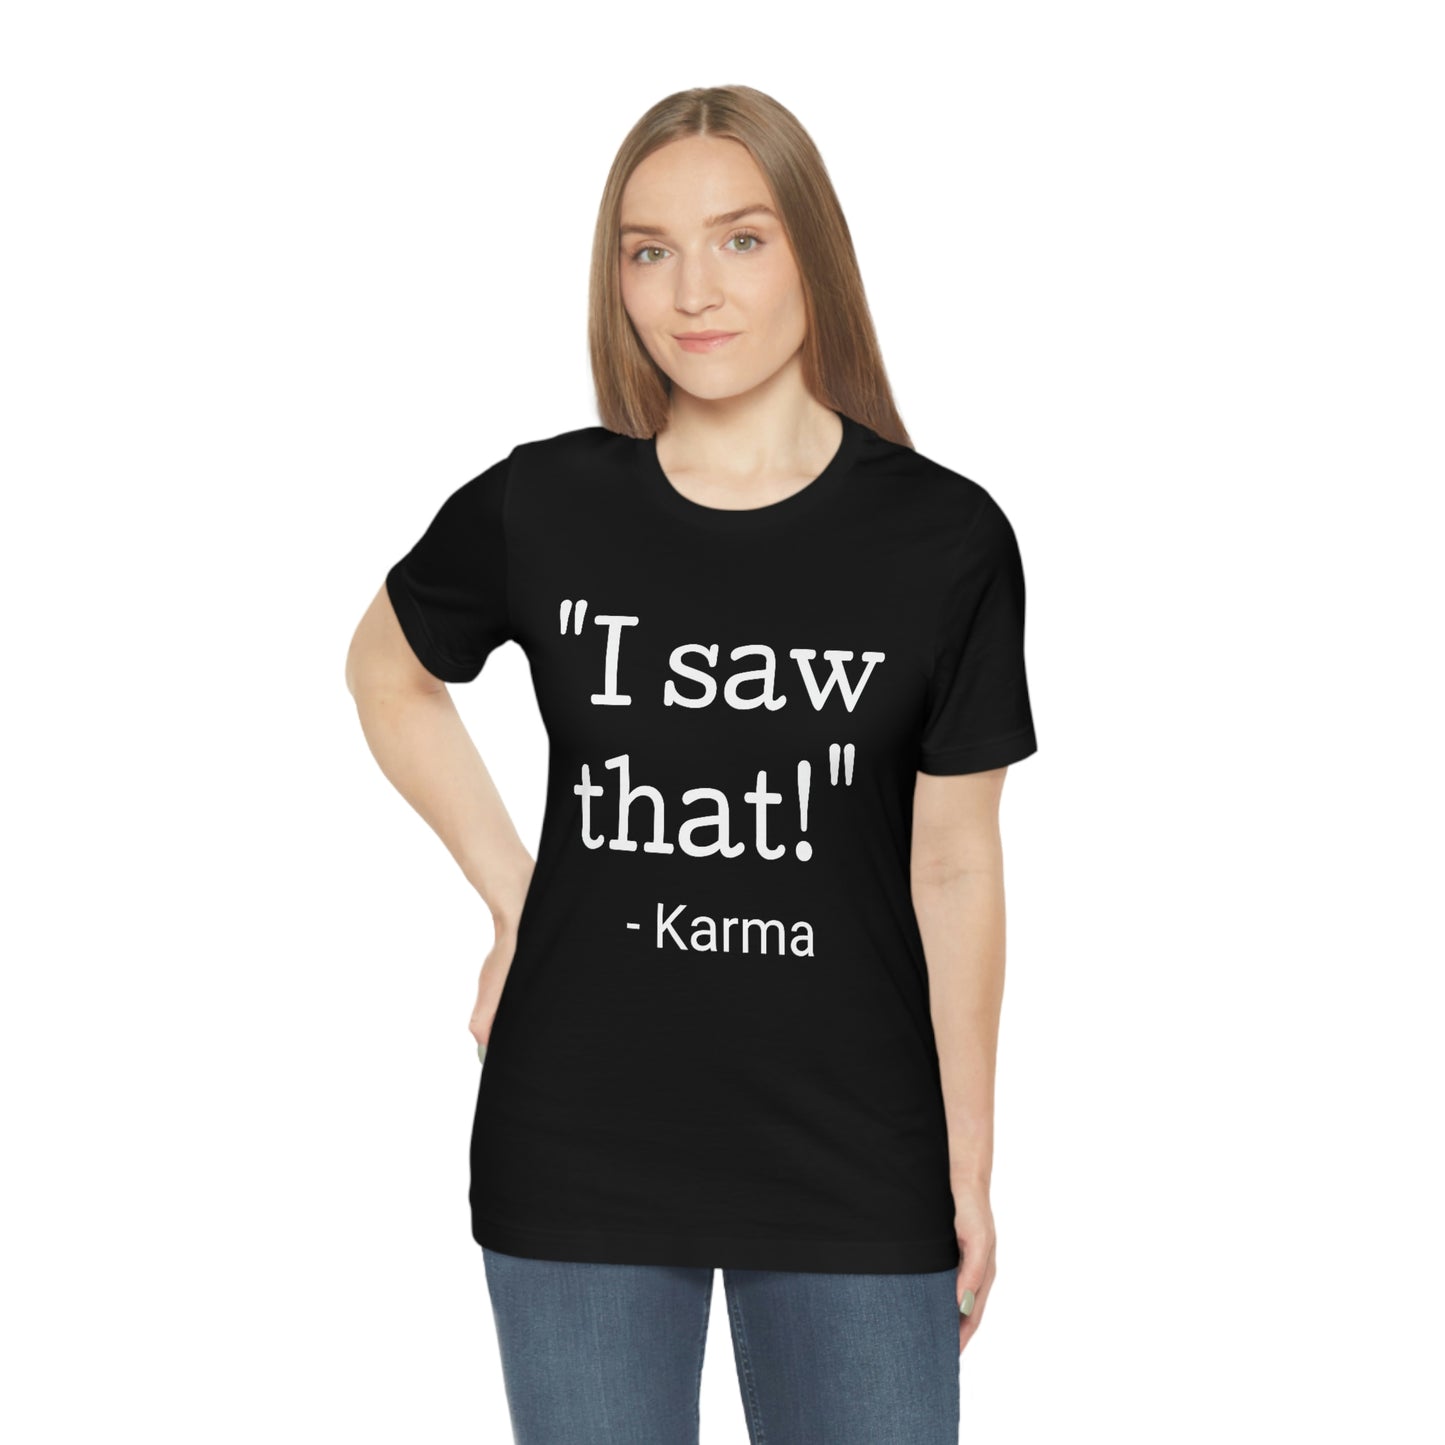 Karma - Unisex Jersey Short Sleeve Tee